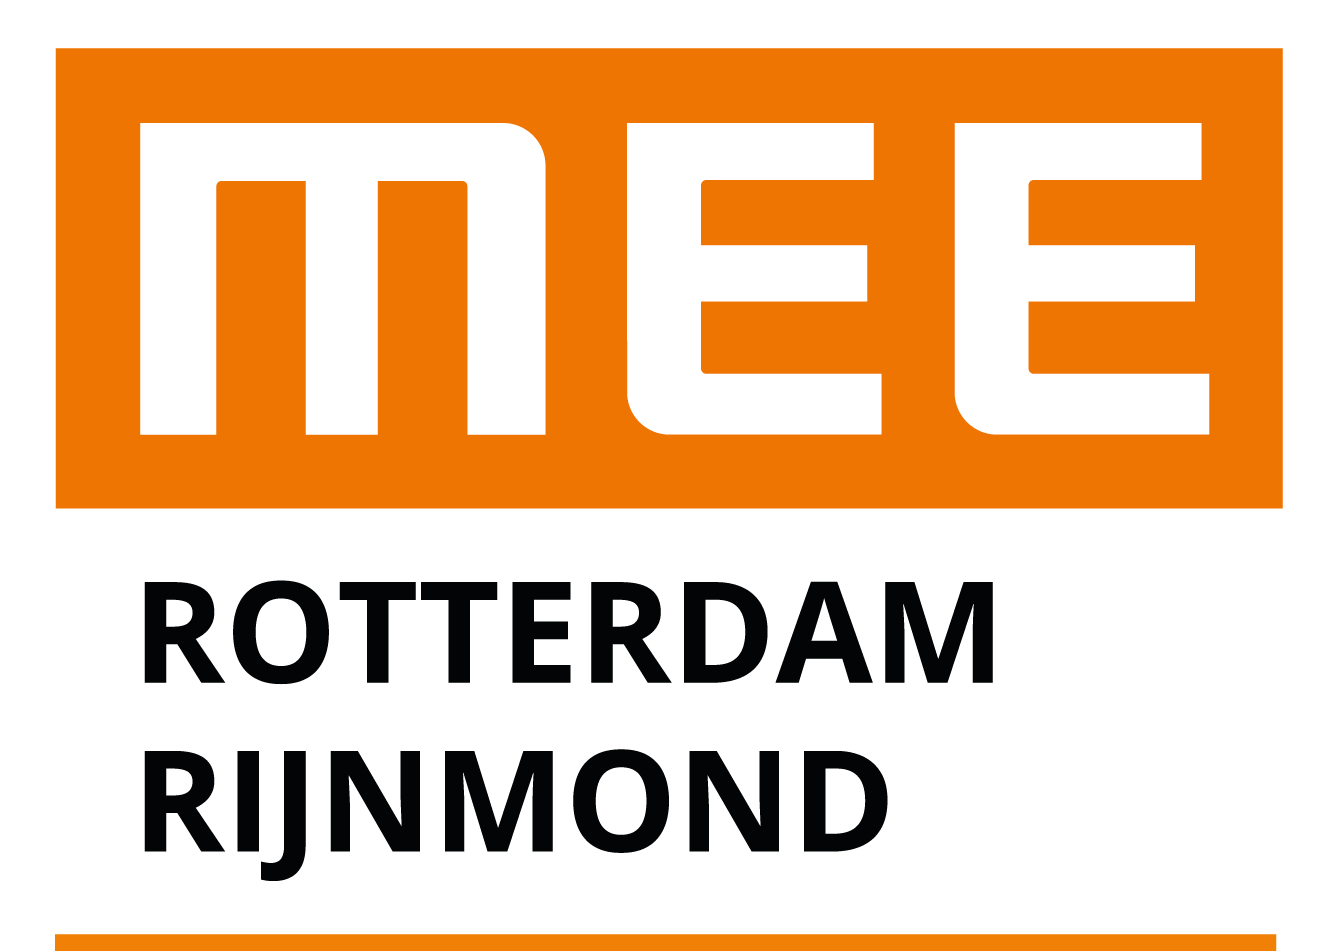 Logo MEE Rotterdam Rijnmond